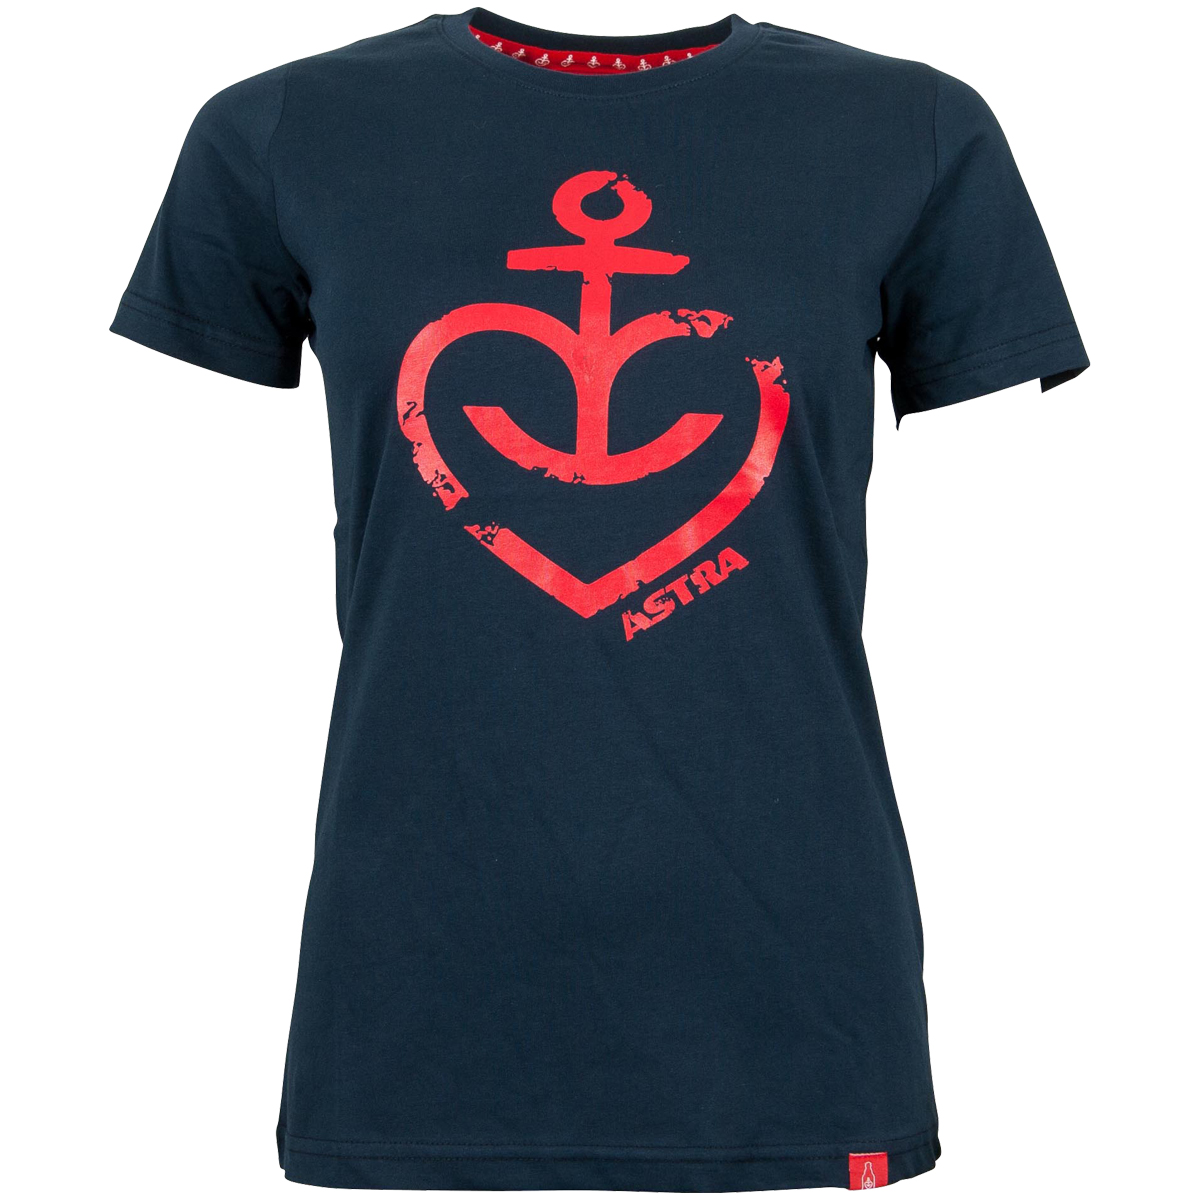 Astra - Damen T-Shirt Herzanker Navy Rot - blau